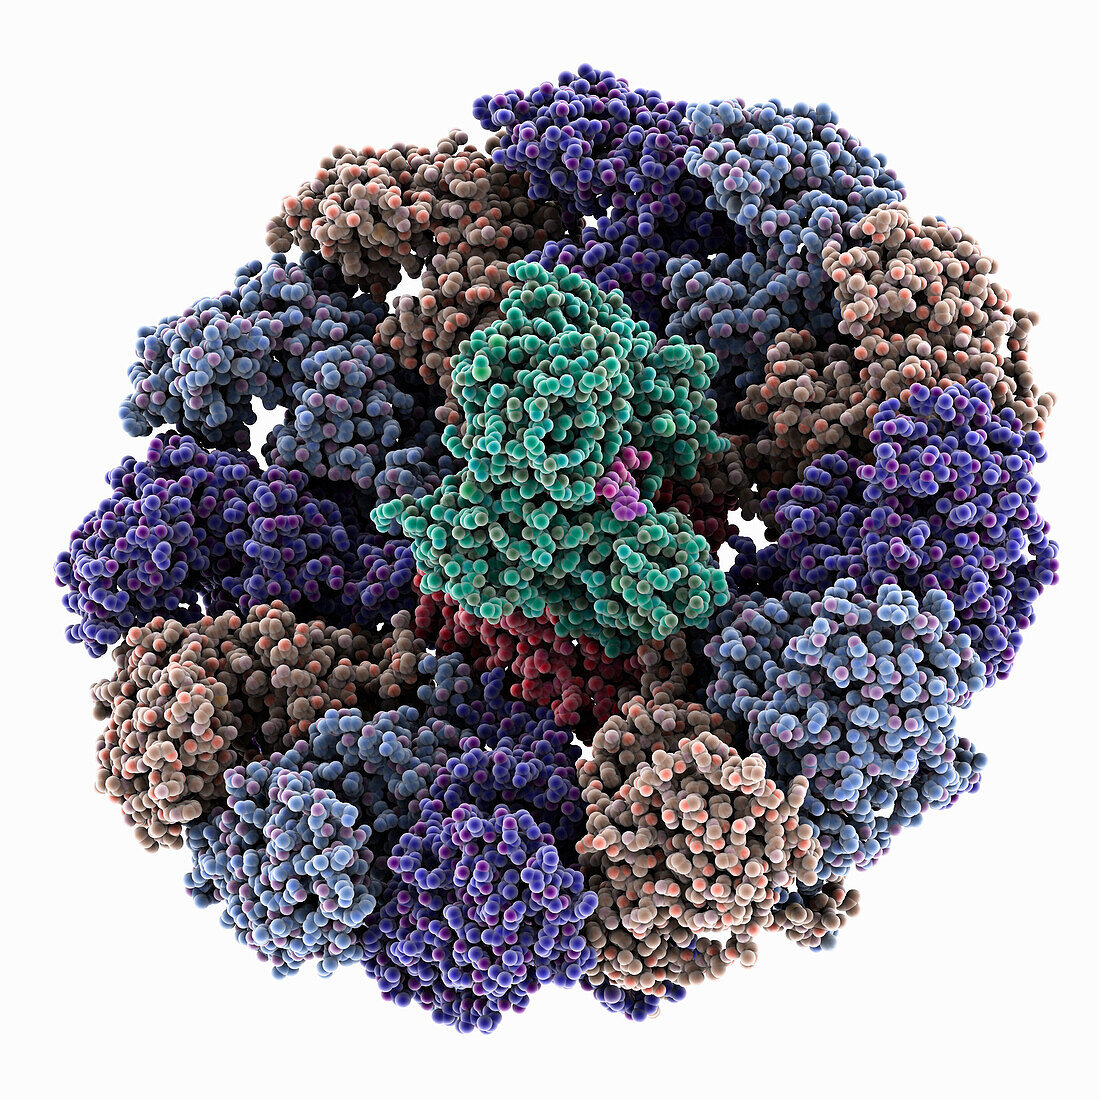 Chikungunya virus replication complex, illustration